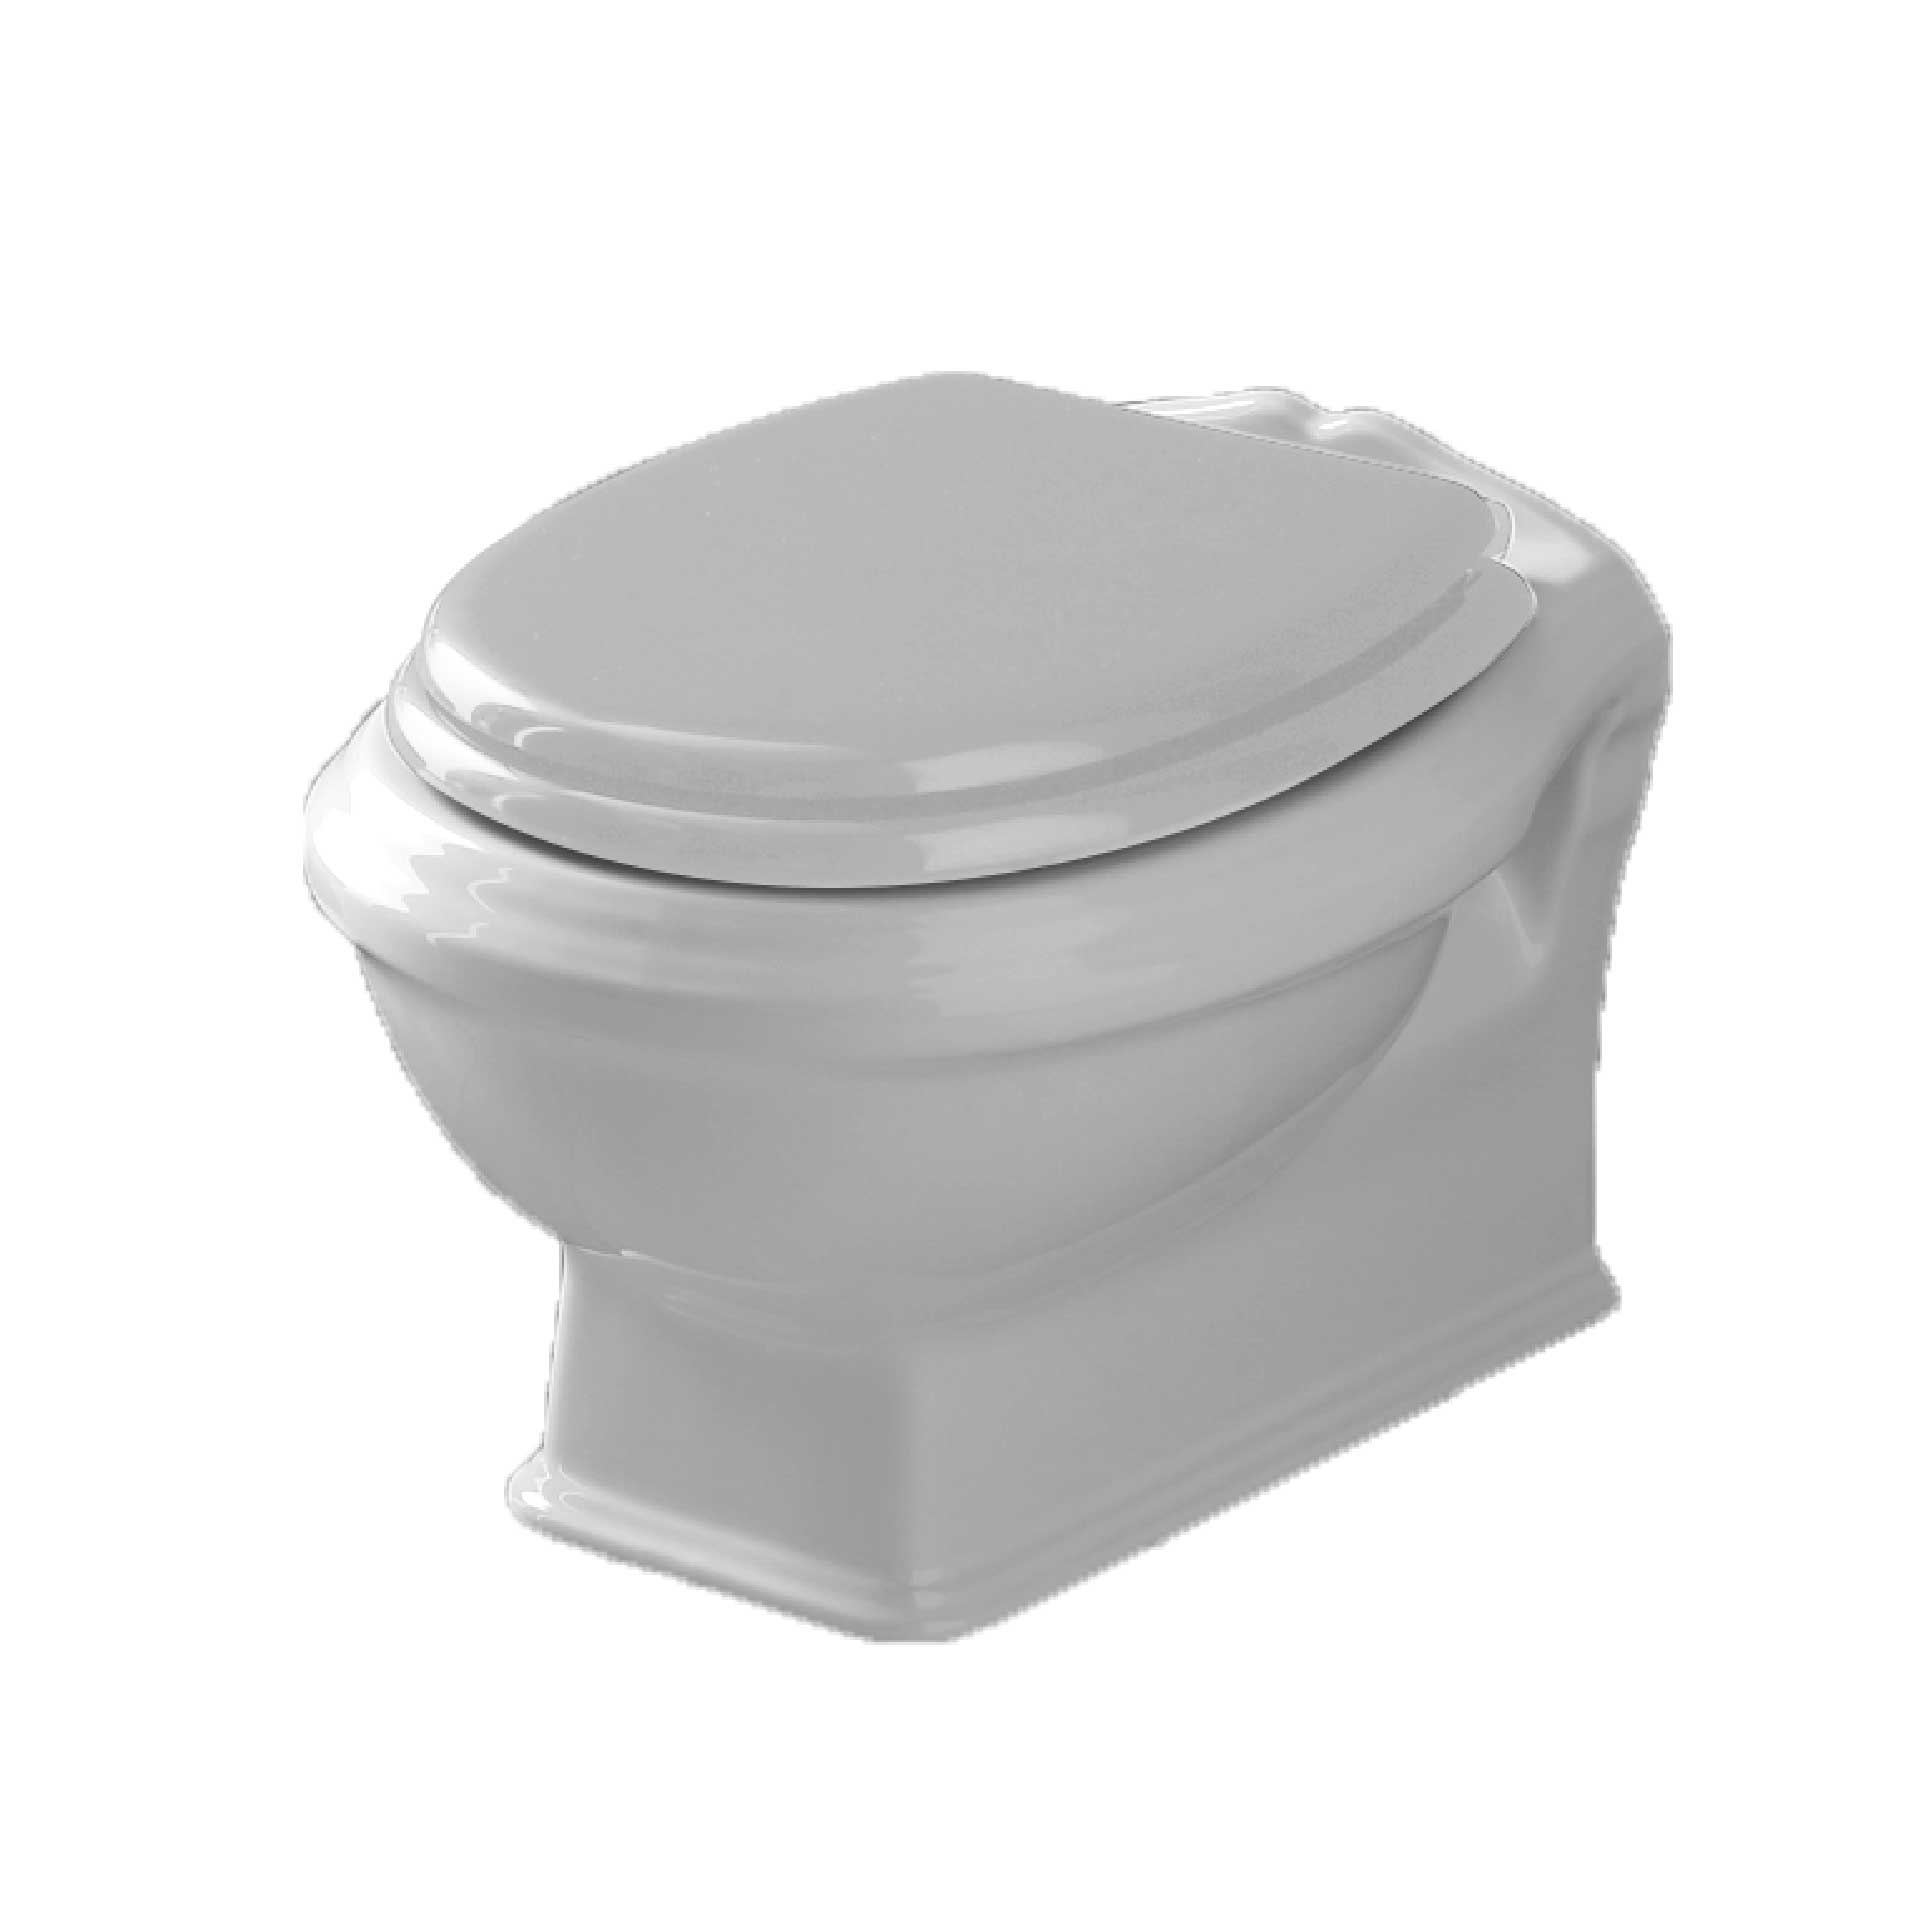 WCB-8C400 Wall mounted toilet bowl